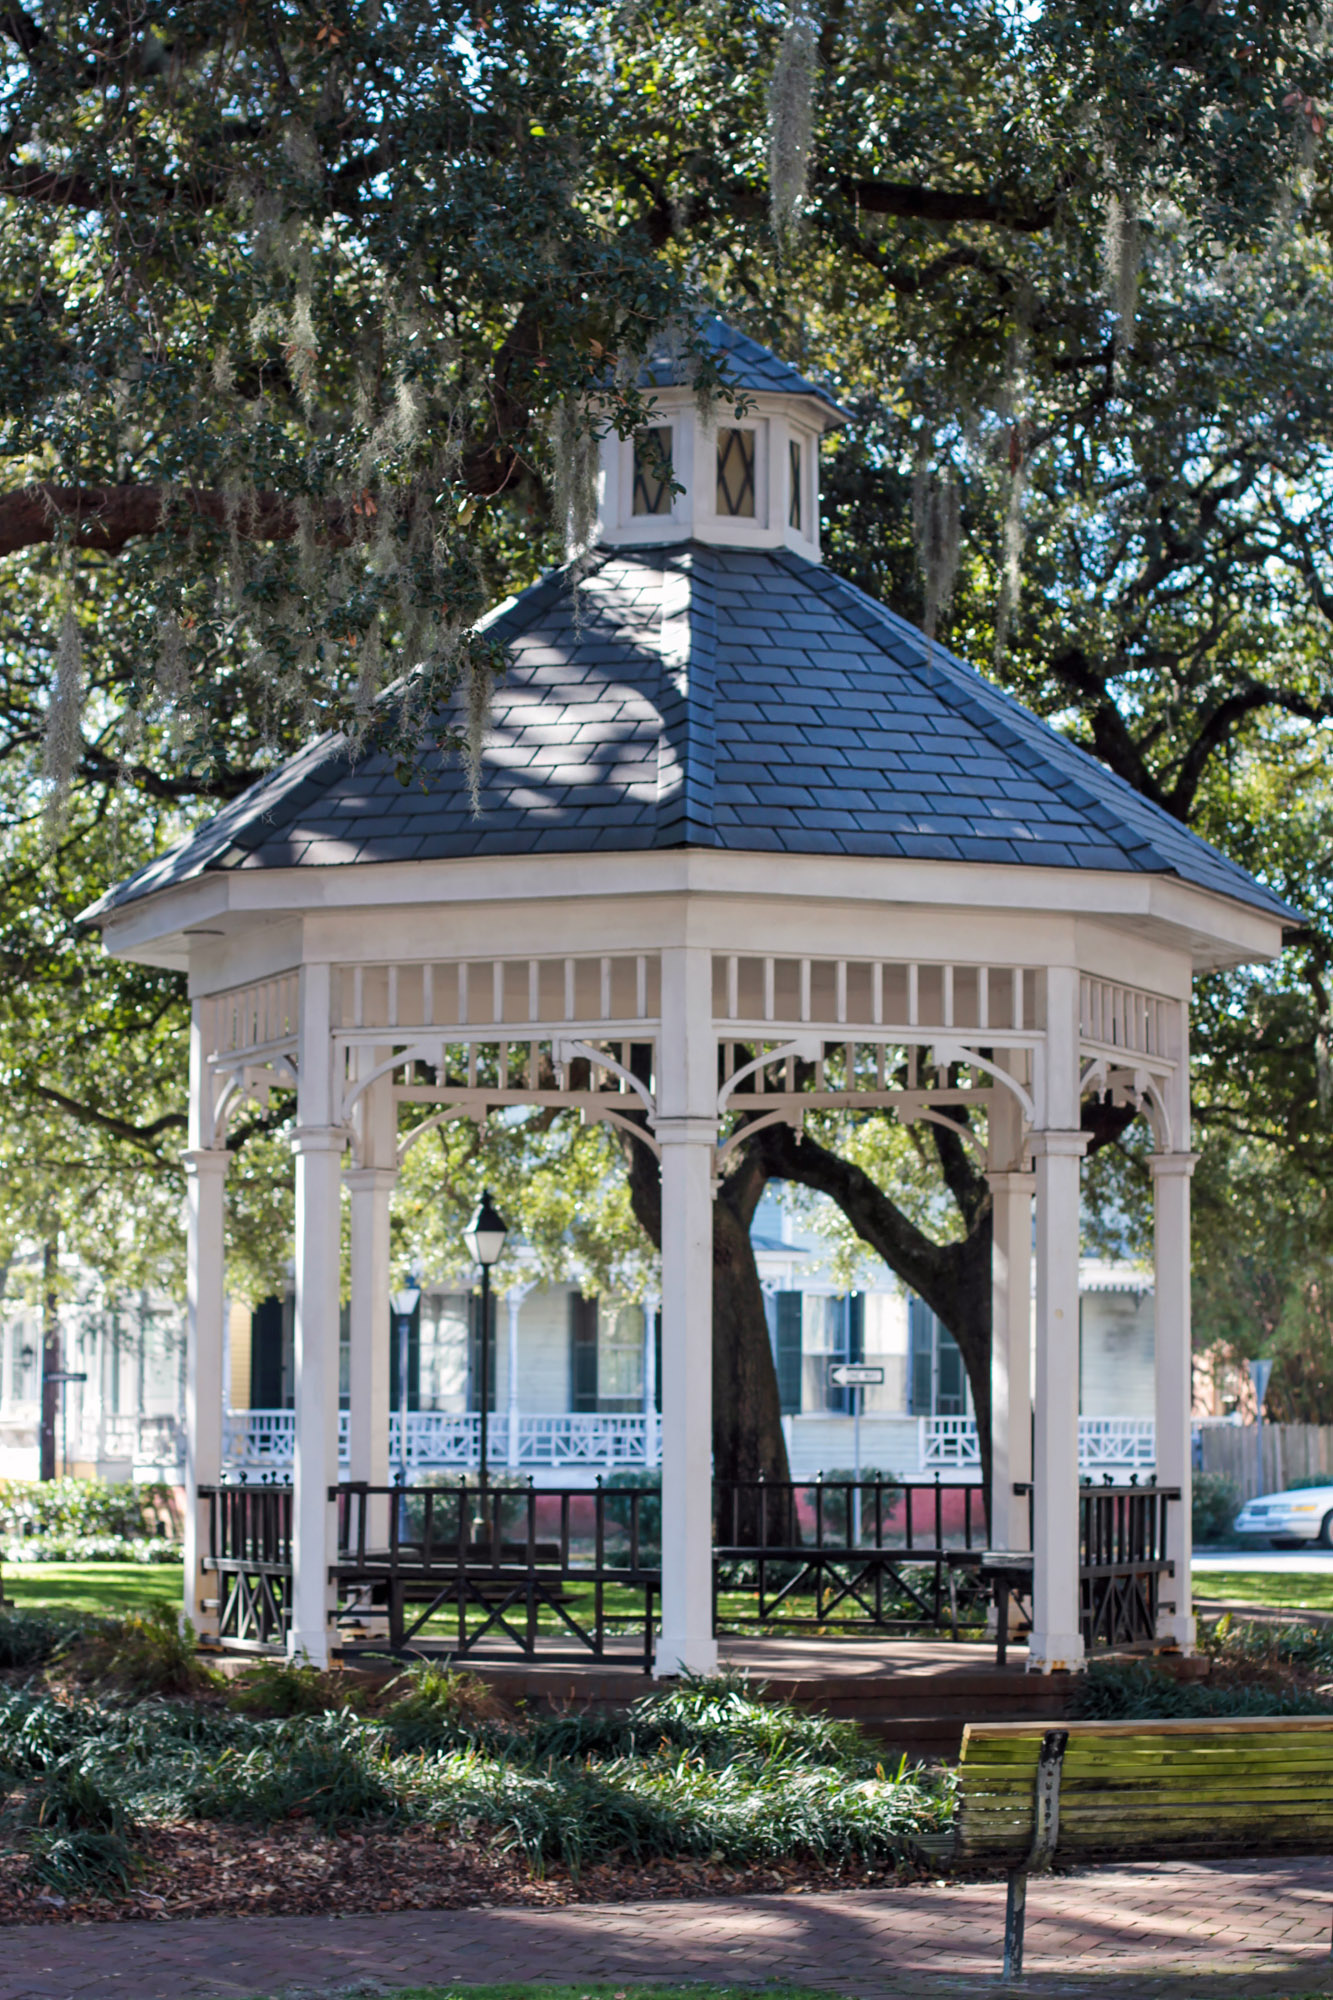 Whitefield Square gazebo in Savannah